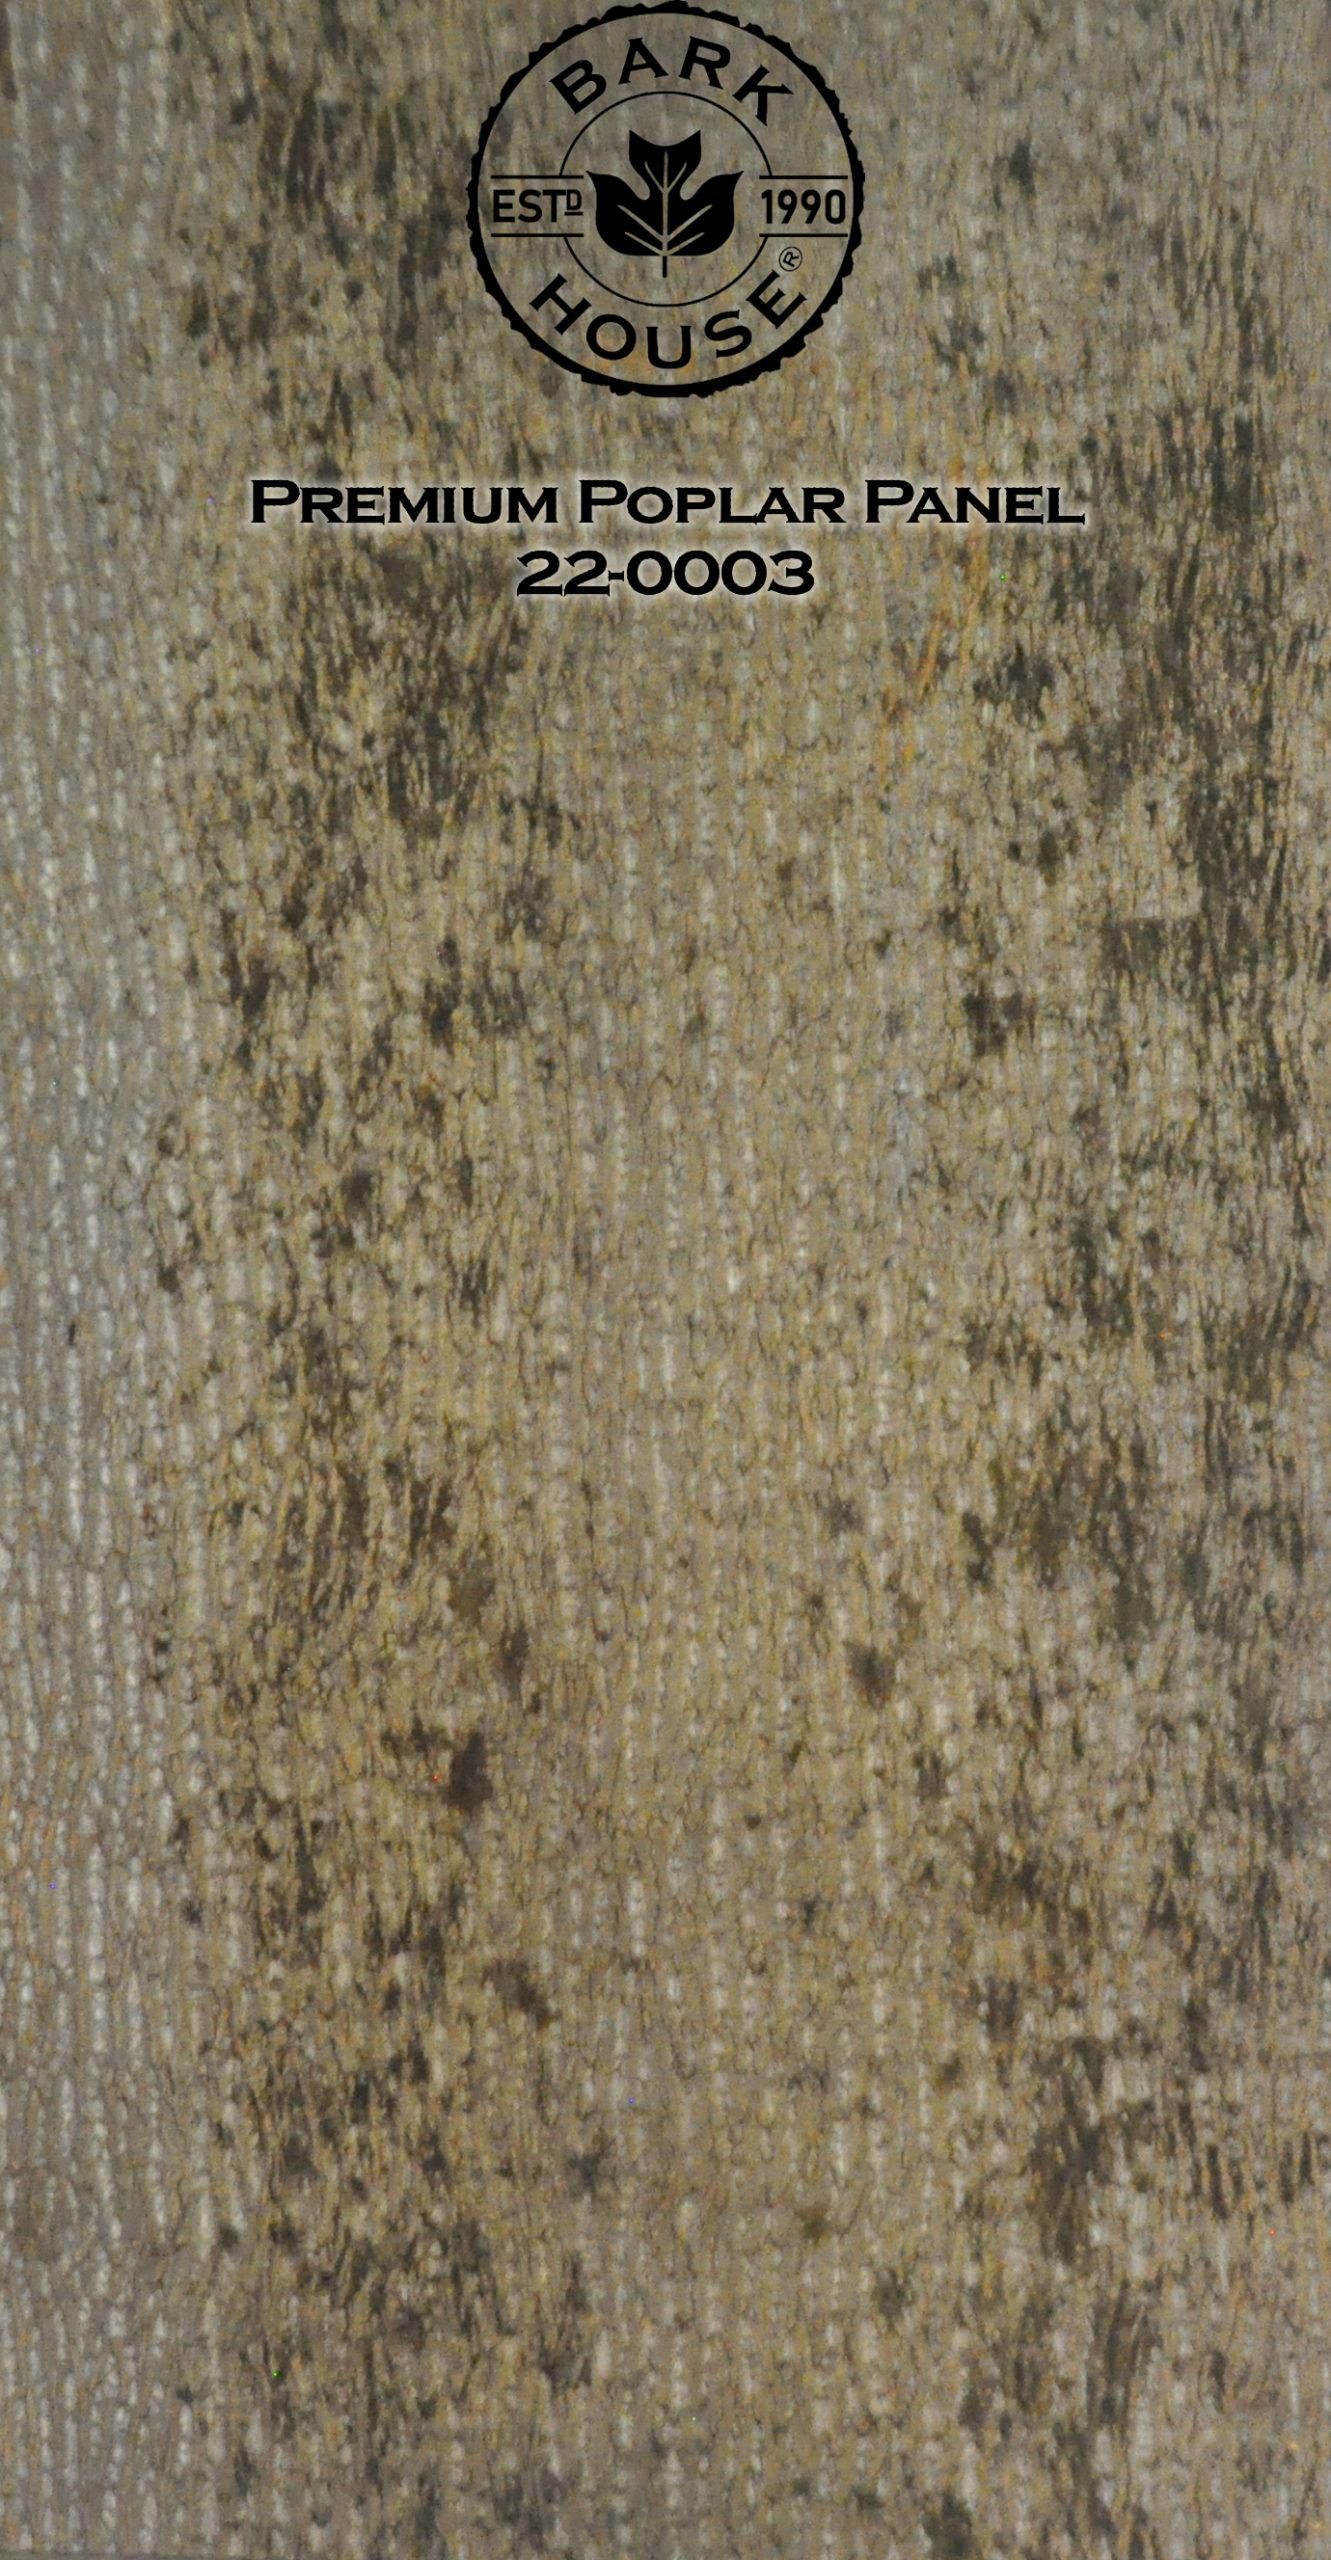 Bark House poplar bark panel SKU POPP-PRE-22-0003